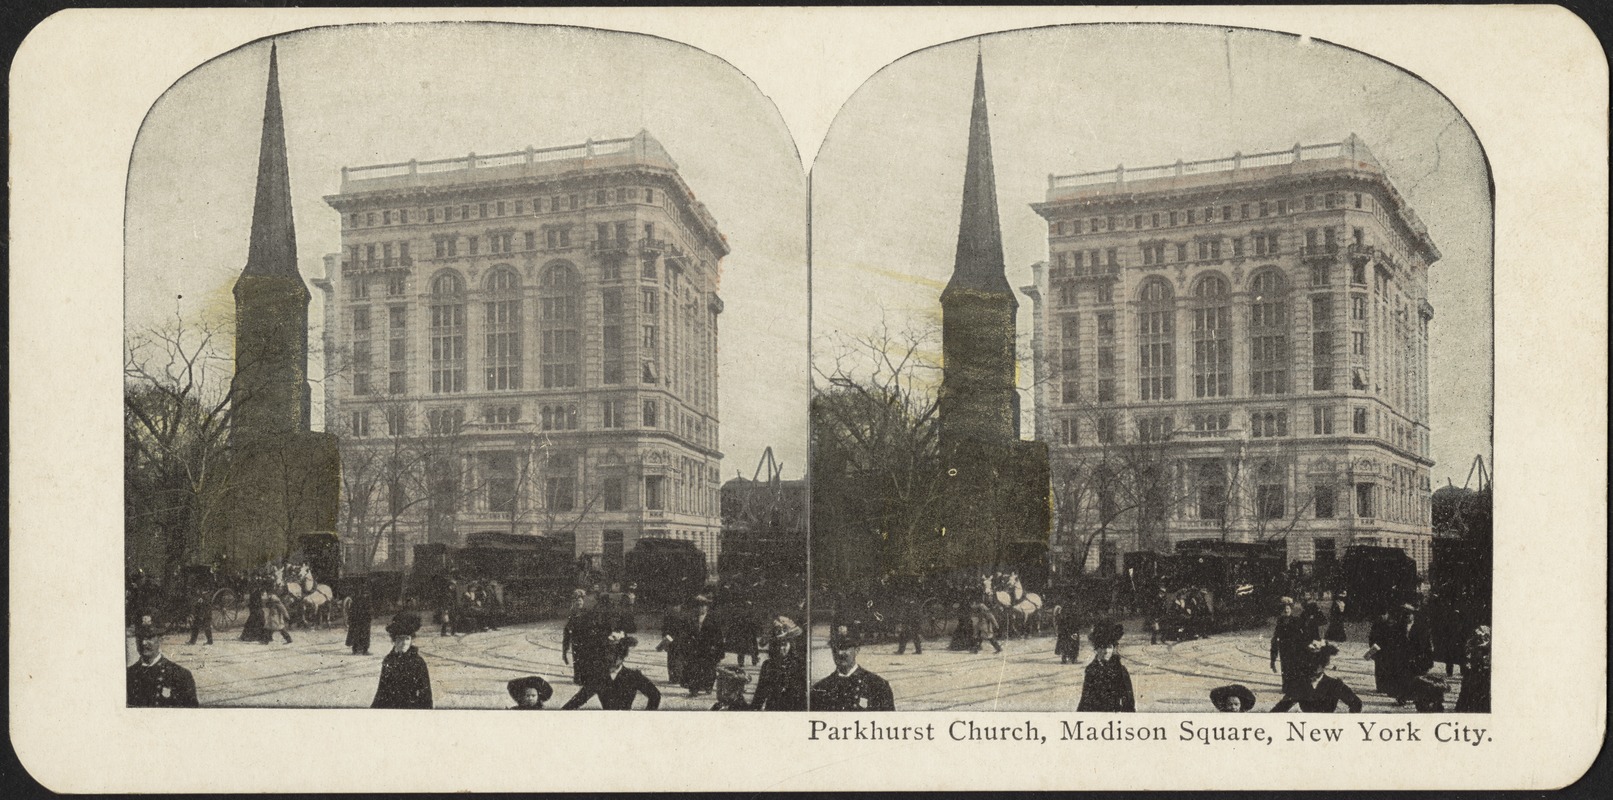 Parkhurst Church, Madison Square, New York City